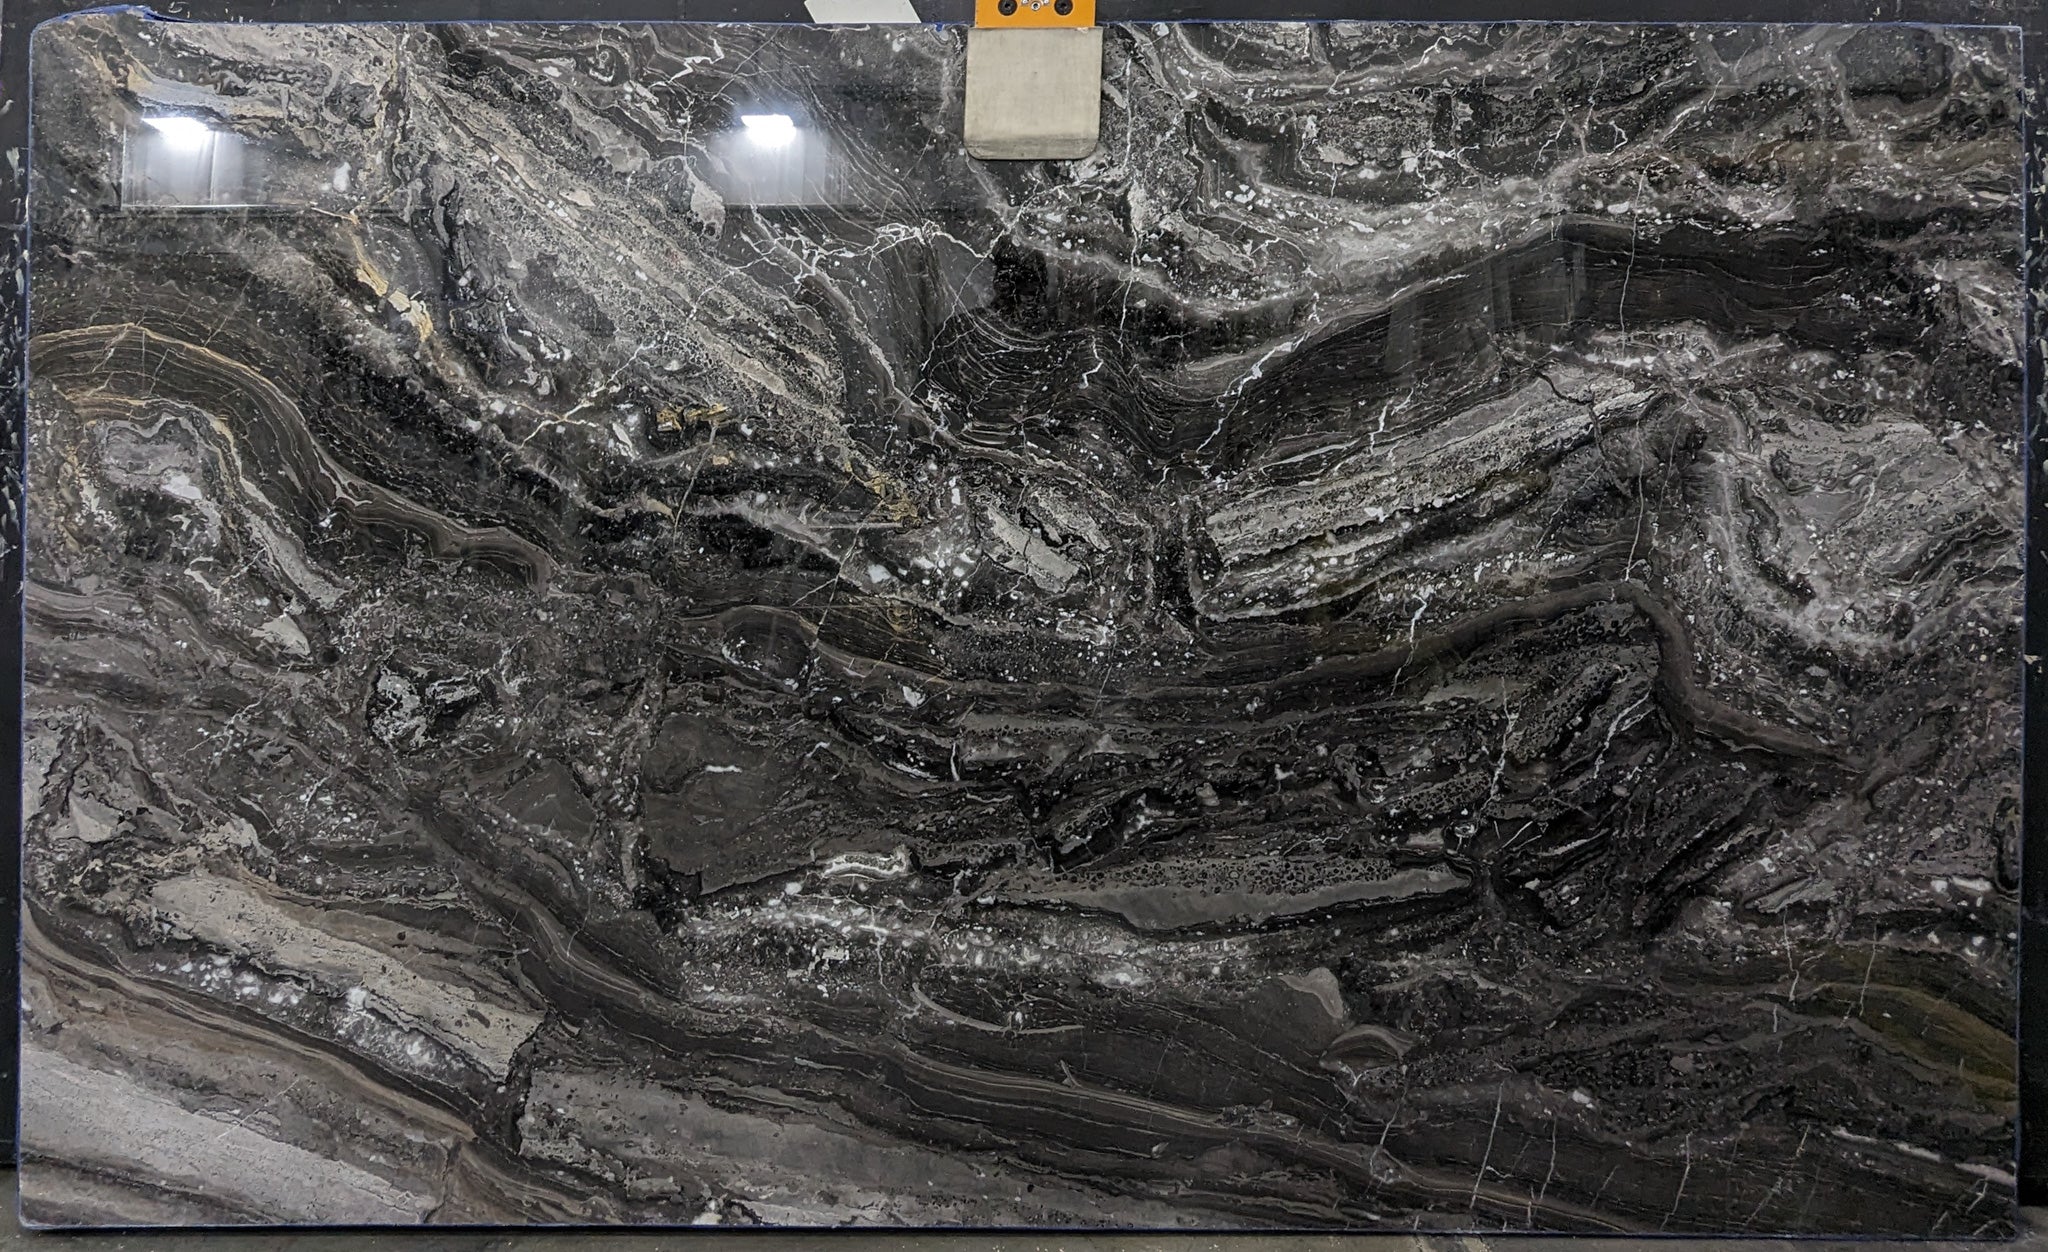  Arabescato Orobico Dark Marble Slab 3/4 - HYEQ#43 -  73x124 